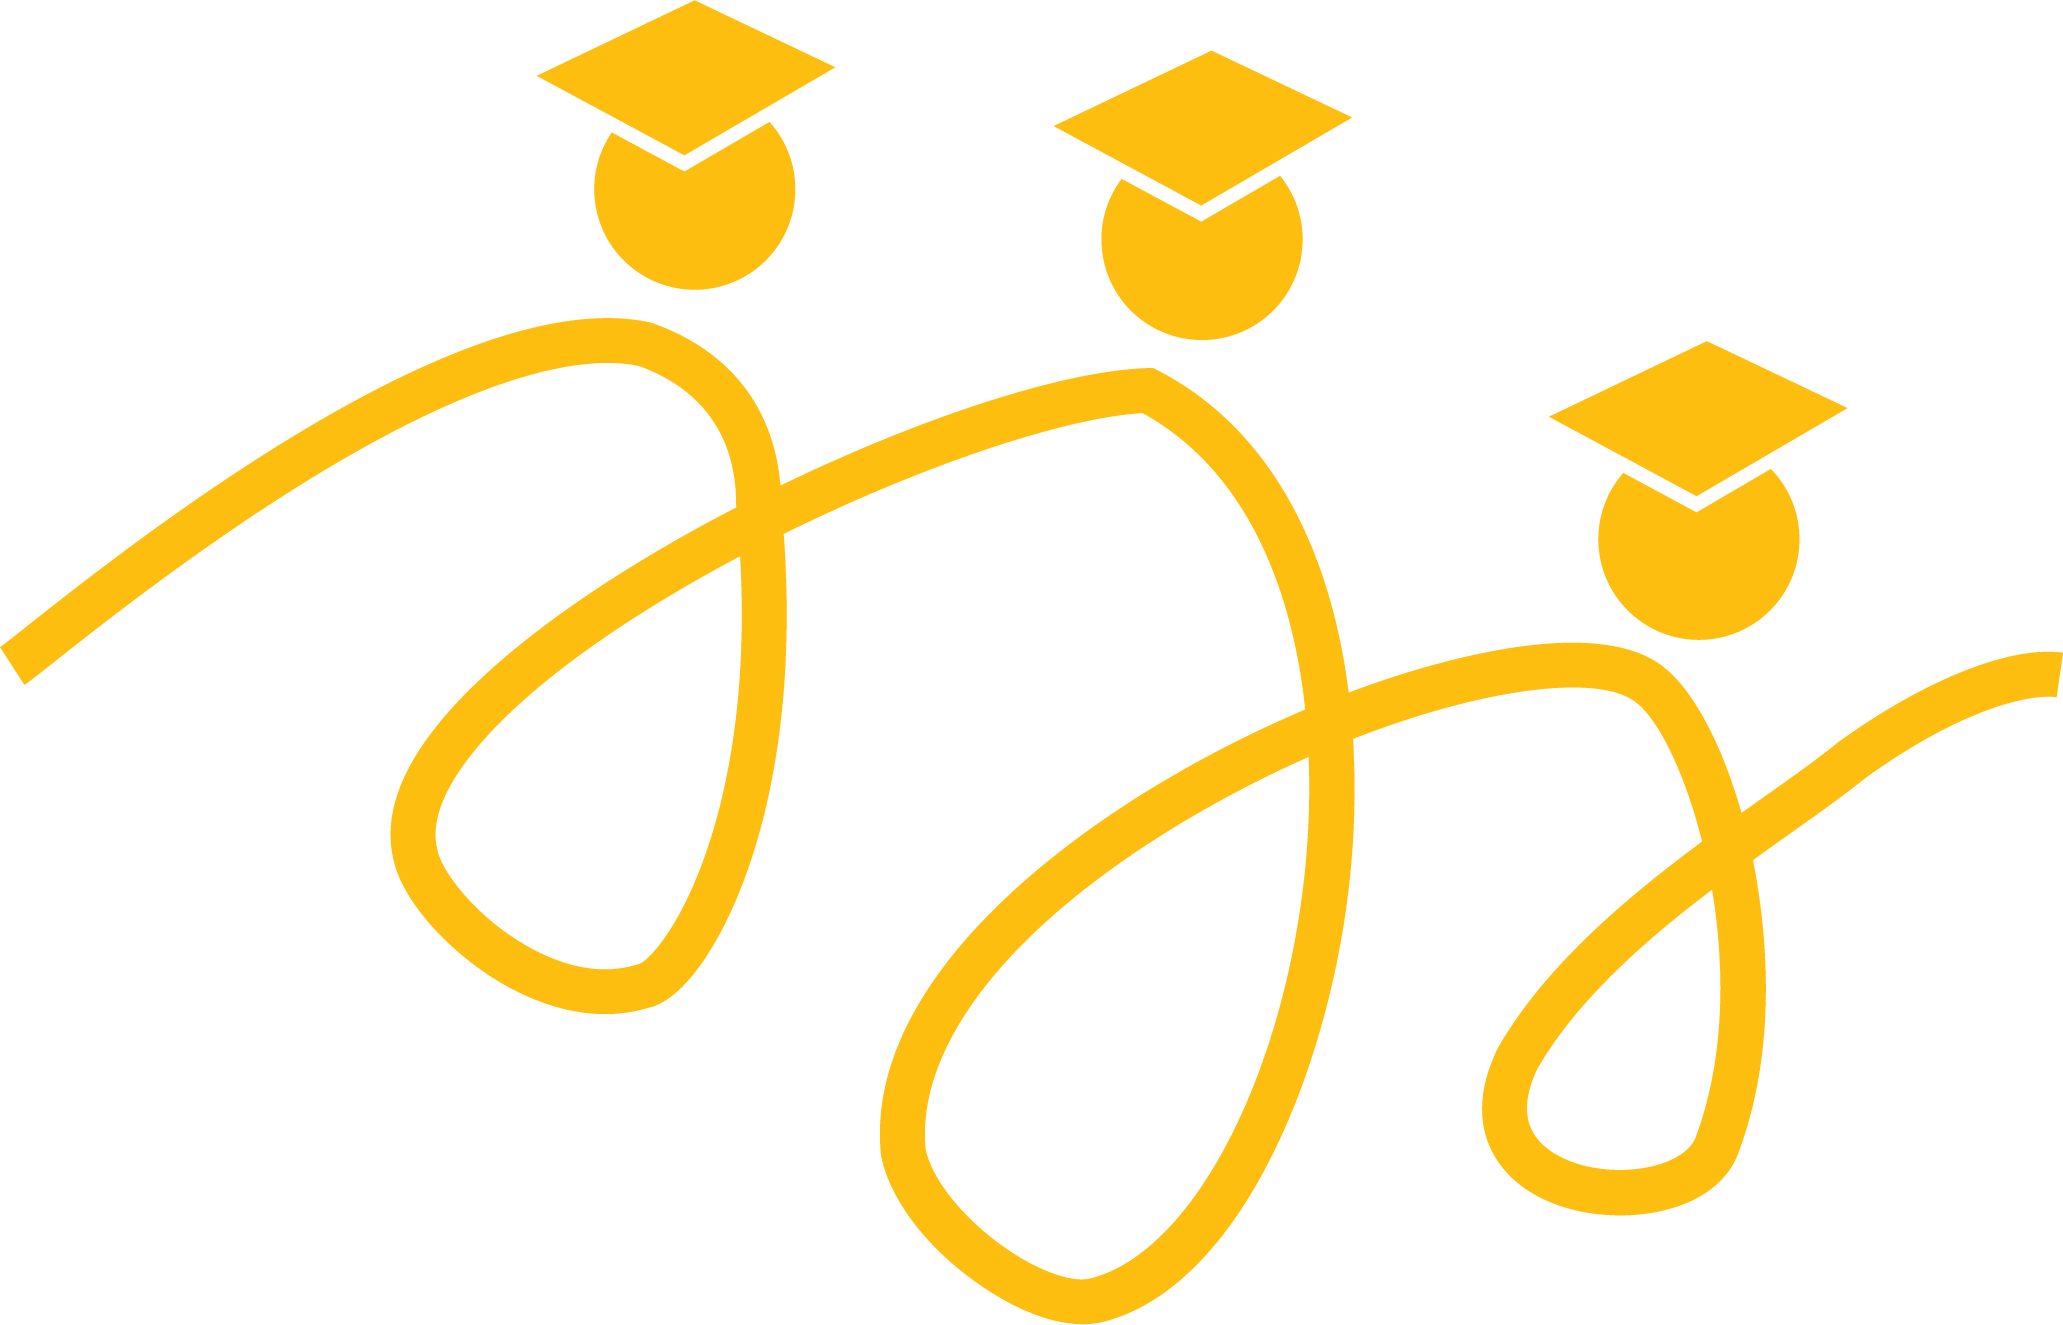 cesp logo bouncing lines with graduation caps